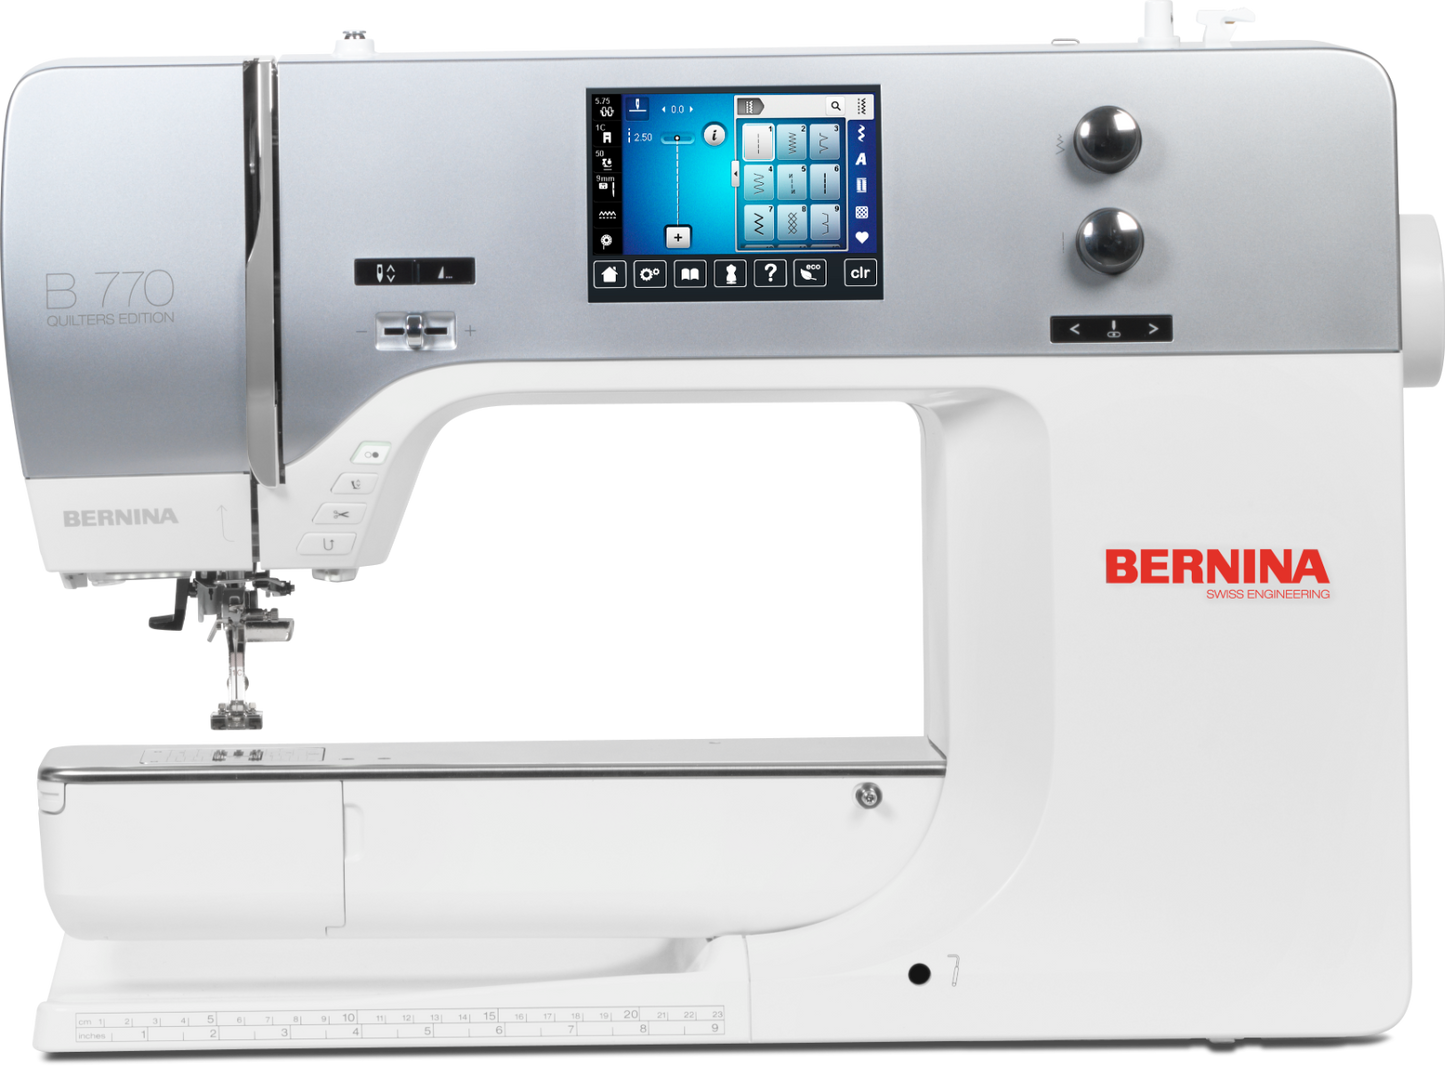 Bernina 770QE Sewing & Embroidery Machine,Bernina 770QE Sewing & Embroidery Machine Bobbin Case,BSR (Bernina Stitch Regulator),,,,,,,Bernina 770QE Sewing & Embroidery Machine,Bernina 770QE Sewing & Embroidery Machine,Bernina 770QE Sewing & Embroidery Machine,Bernina 770QE Sewing & Embroidery Machine,Bernina 770QE Sewing & Embroidery Machine